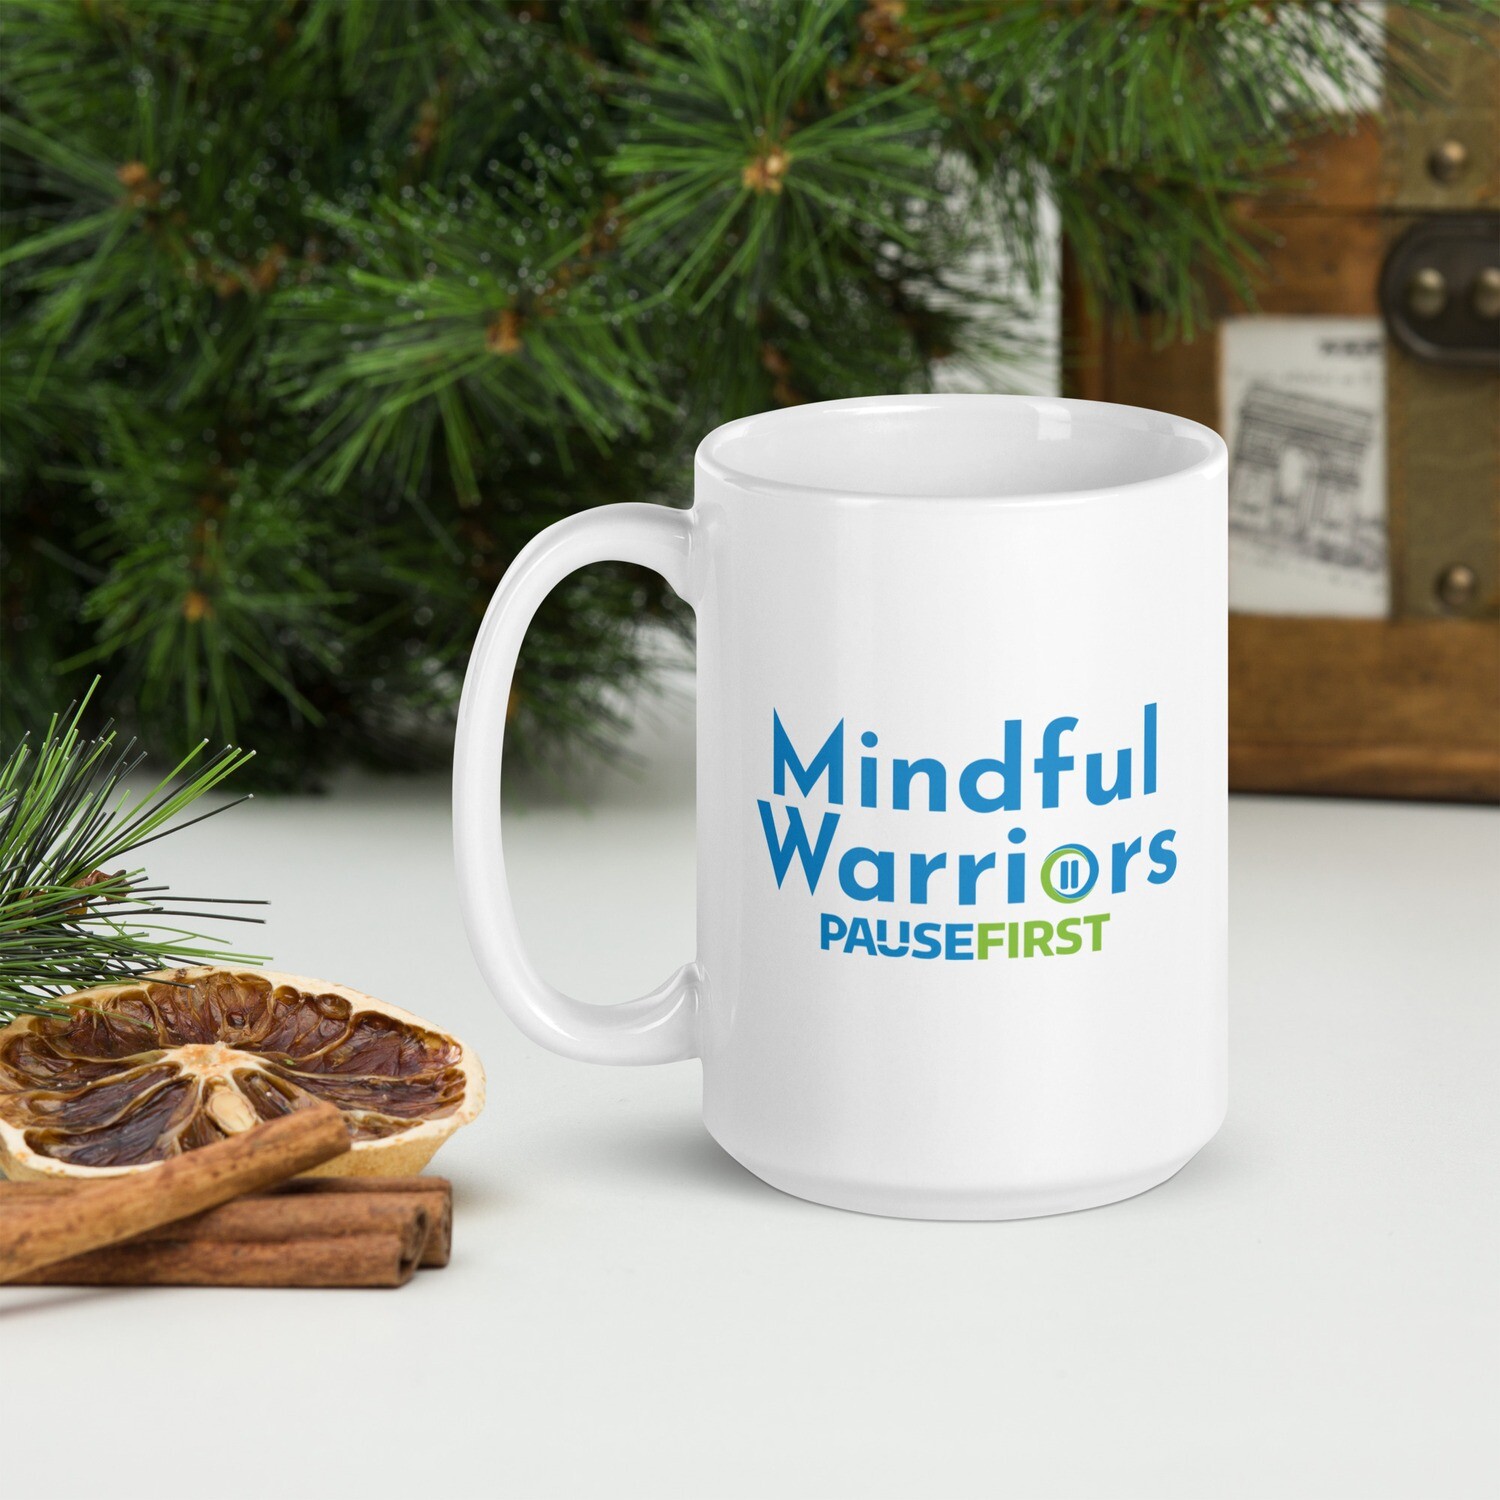 Mindful Warriors Pause First 15oz white glossy mug